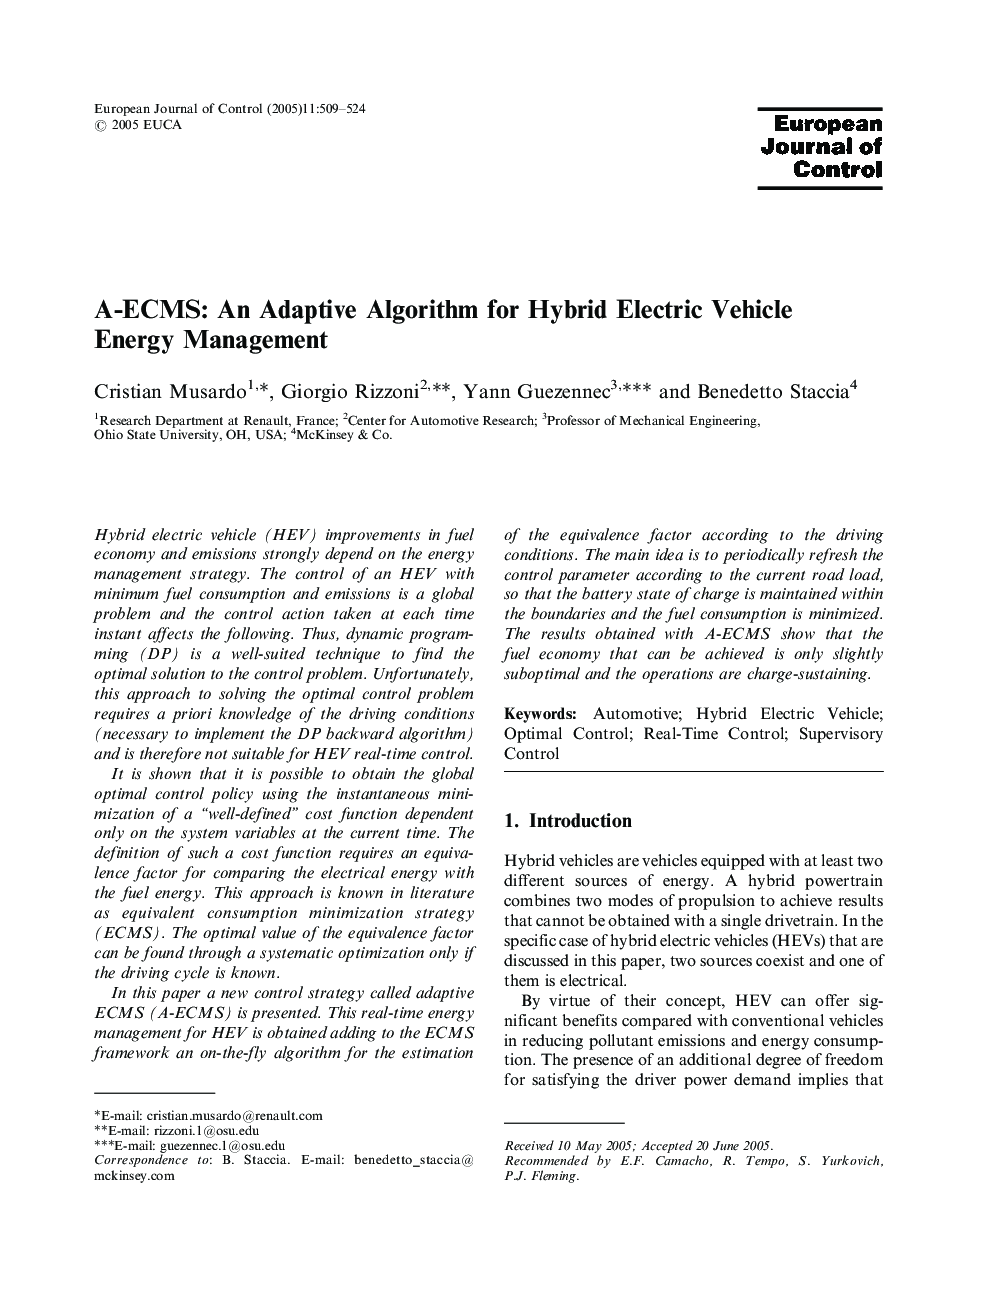 A-ECMS: An Adaptive Algorithm for Hybrid Electric Vehicle Energy Management